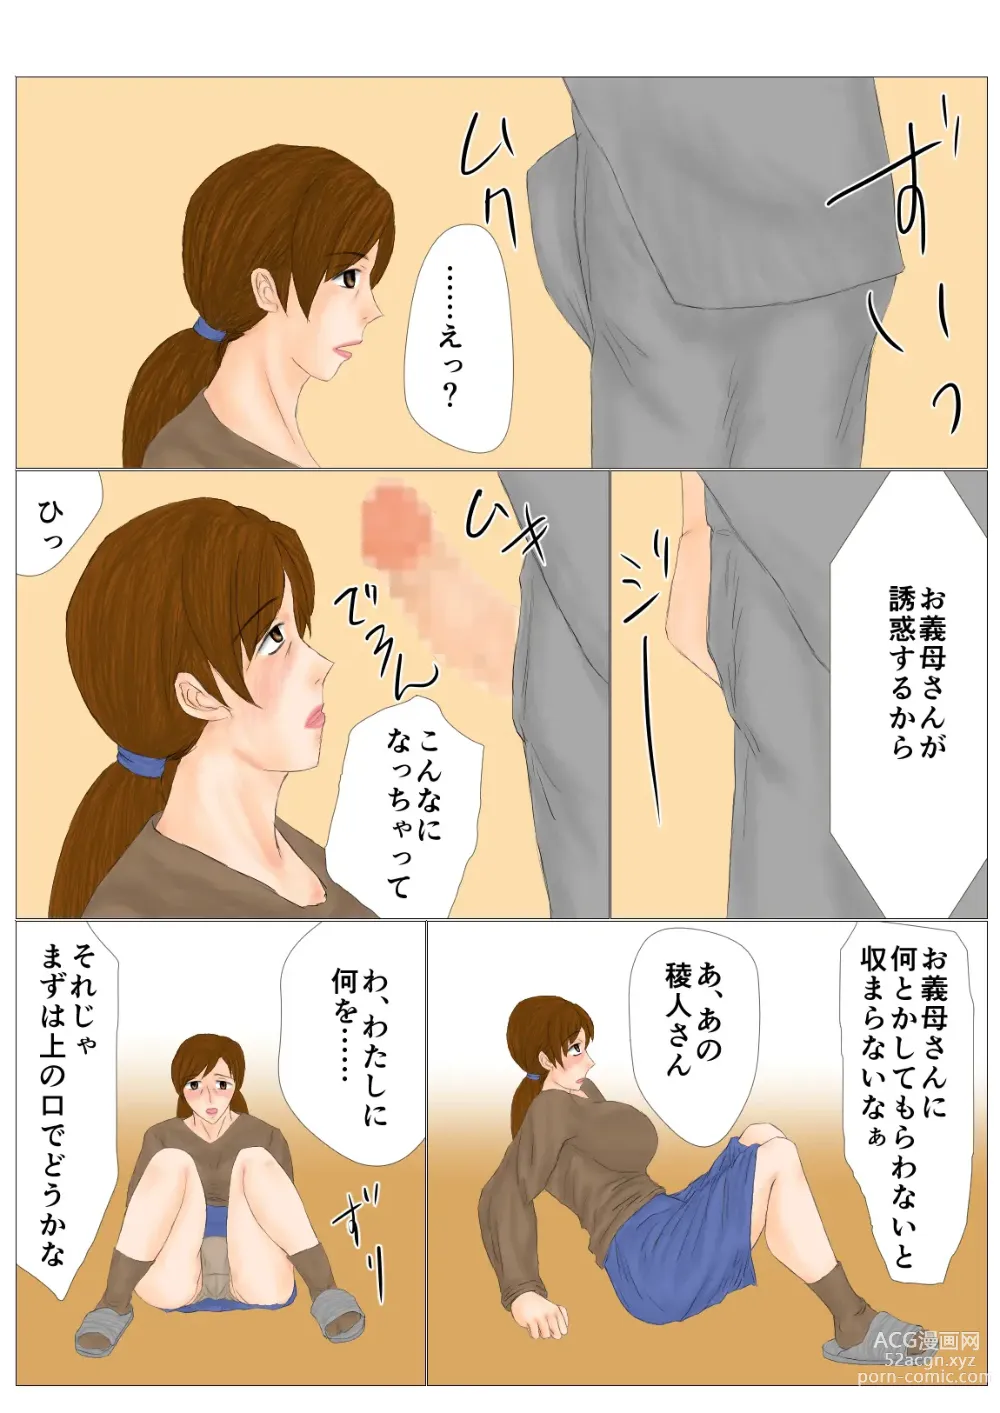 Page 6 of doujinshi Tsumahahakan